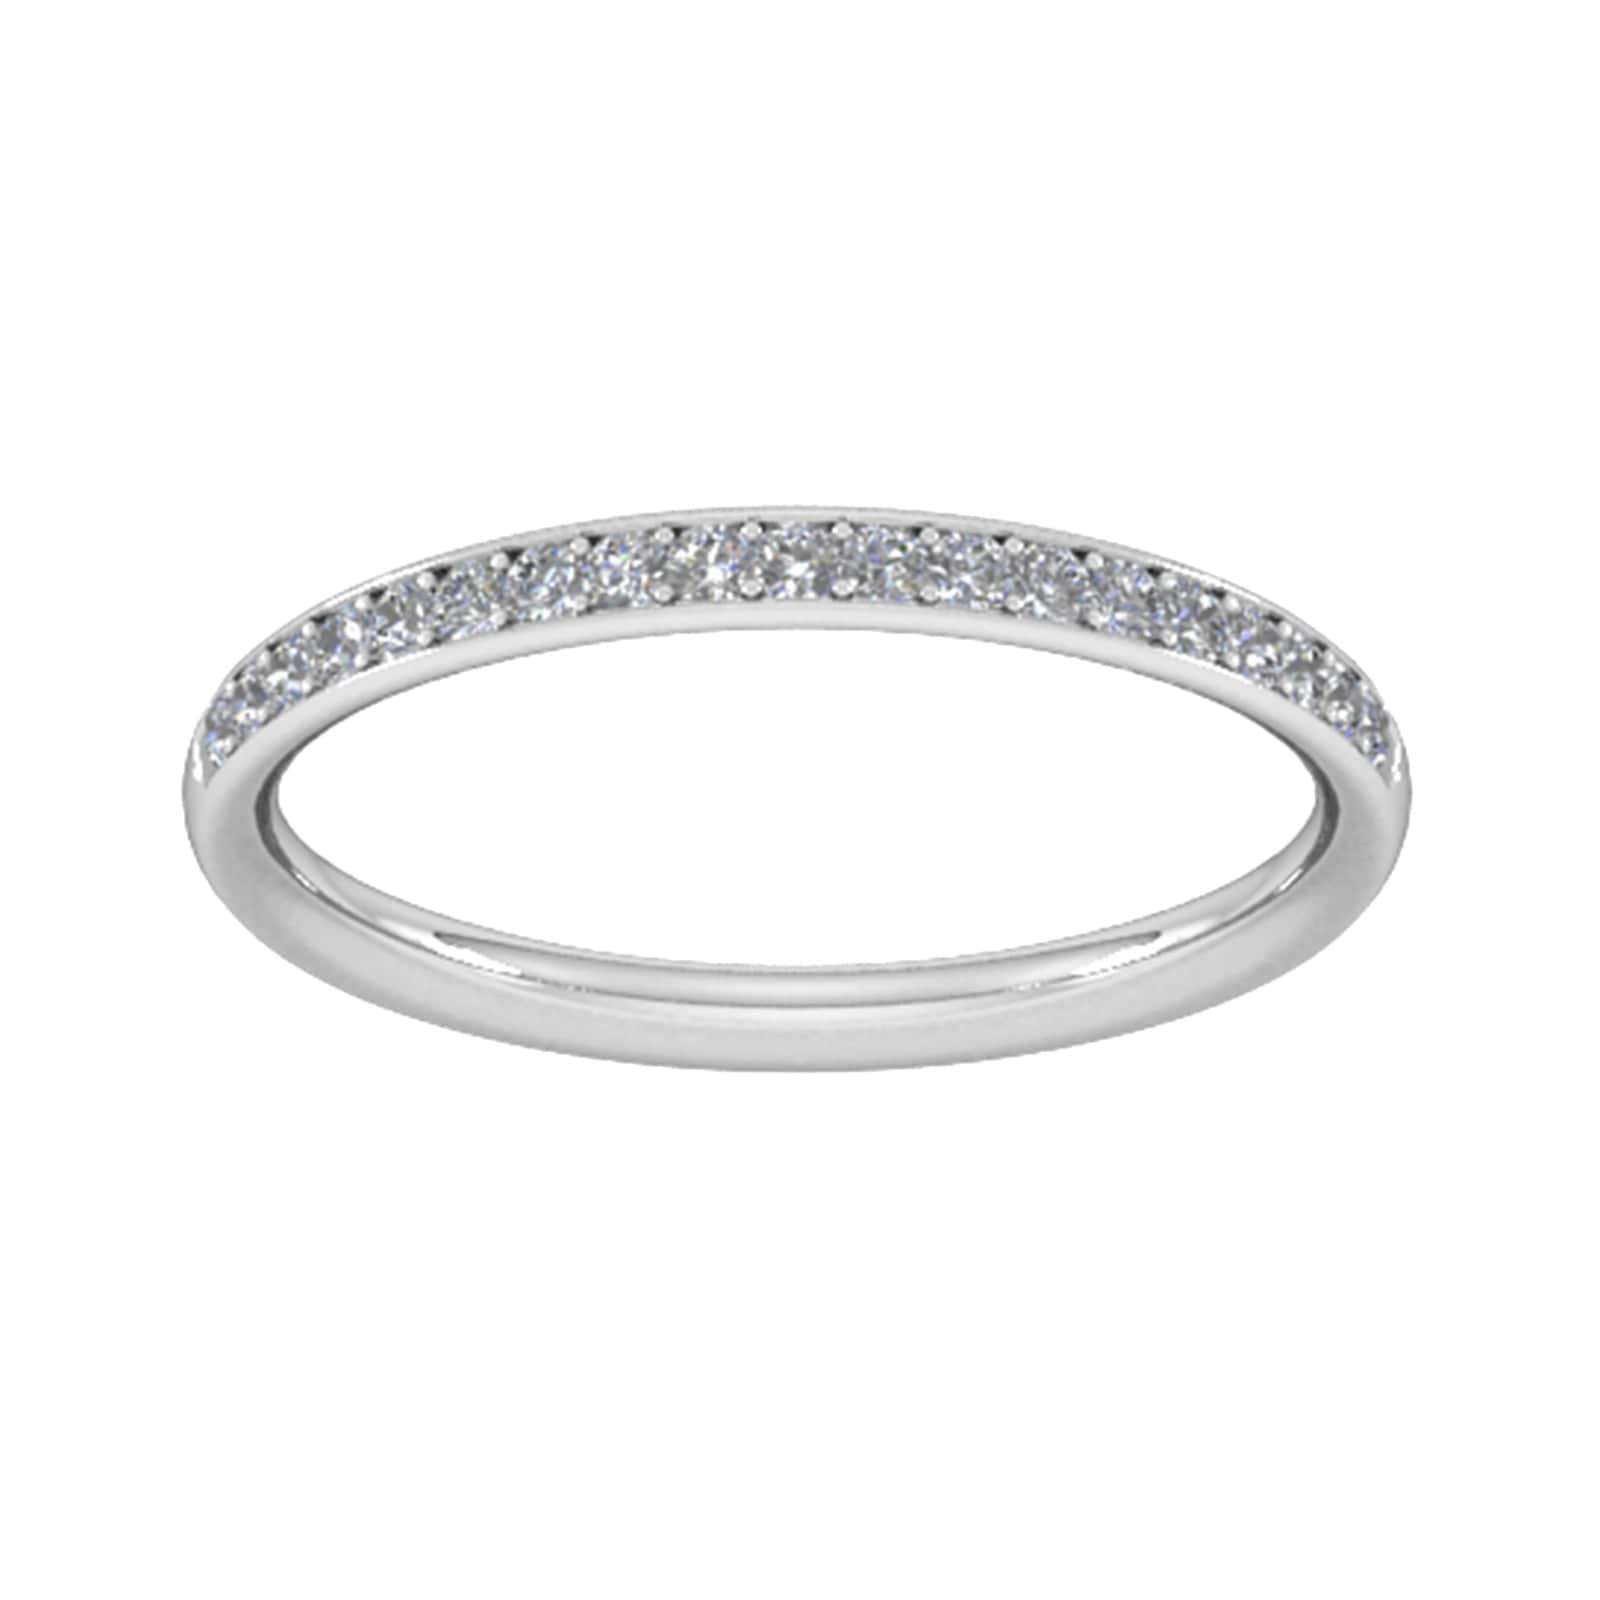 0.18 Carat Total Weight Brilliant Cut Grain Set Diamond Wedding Ring In 18 Carat White Gold - Ring Size Z